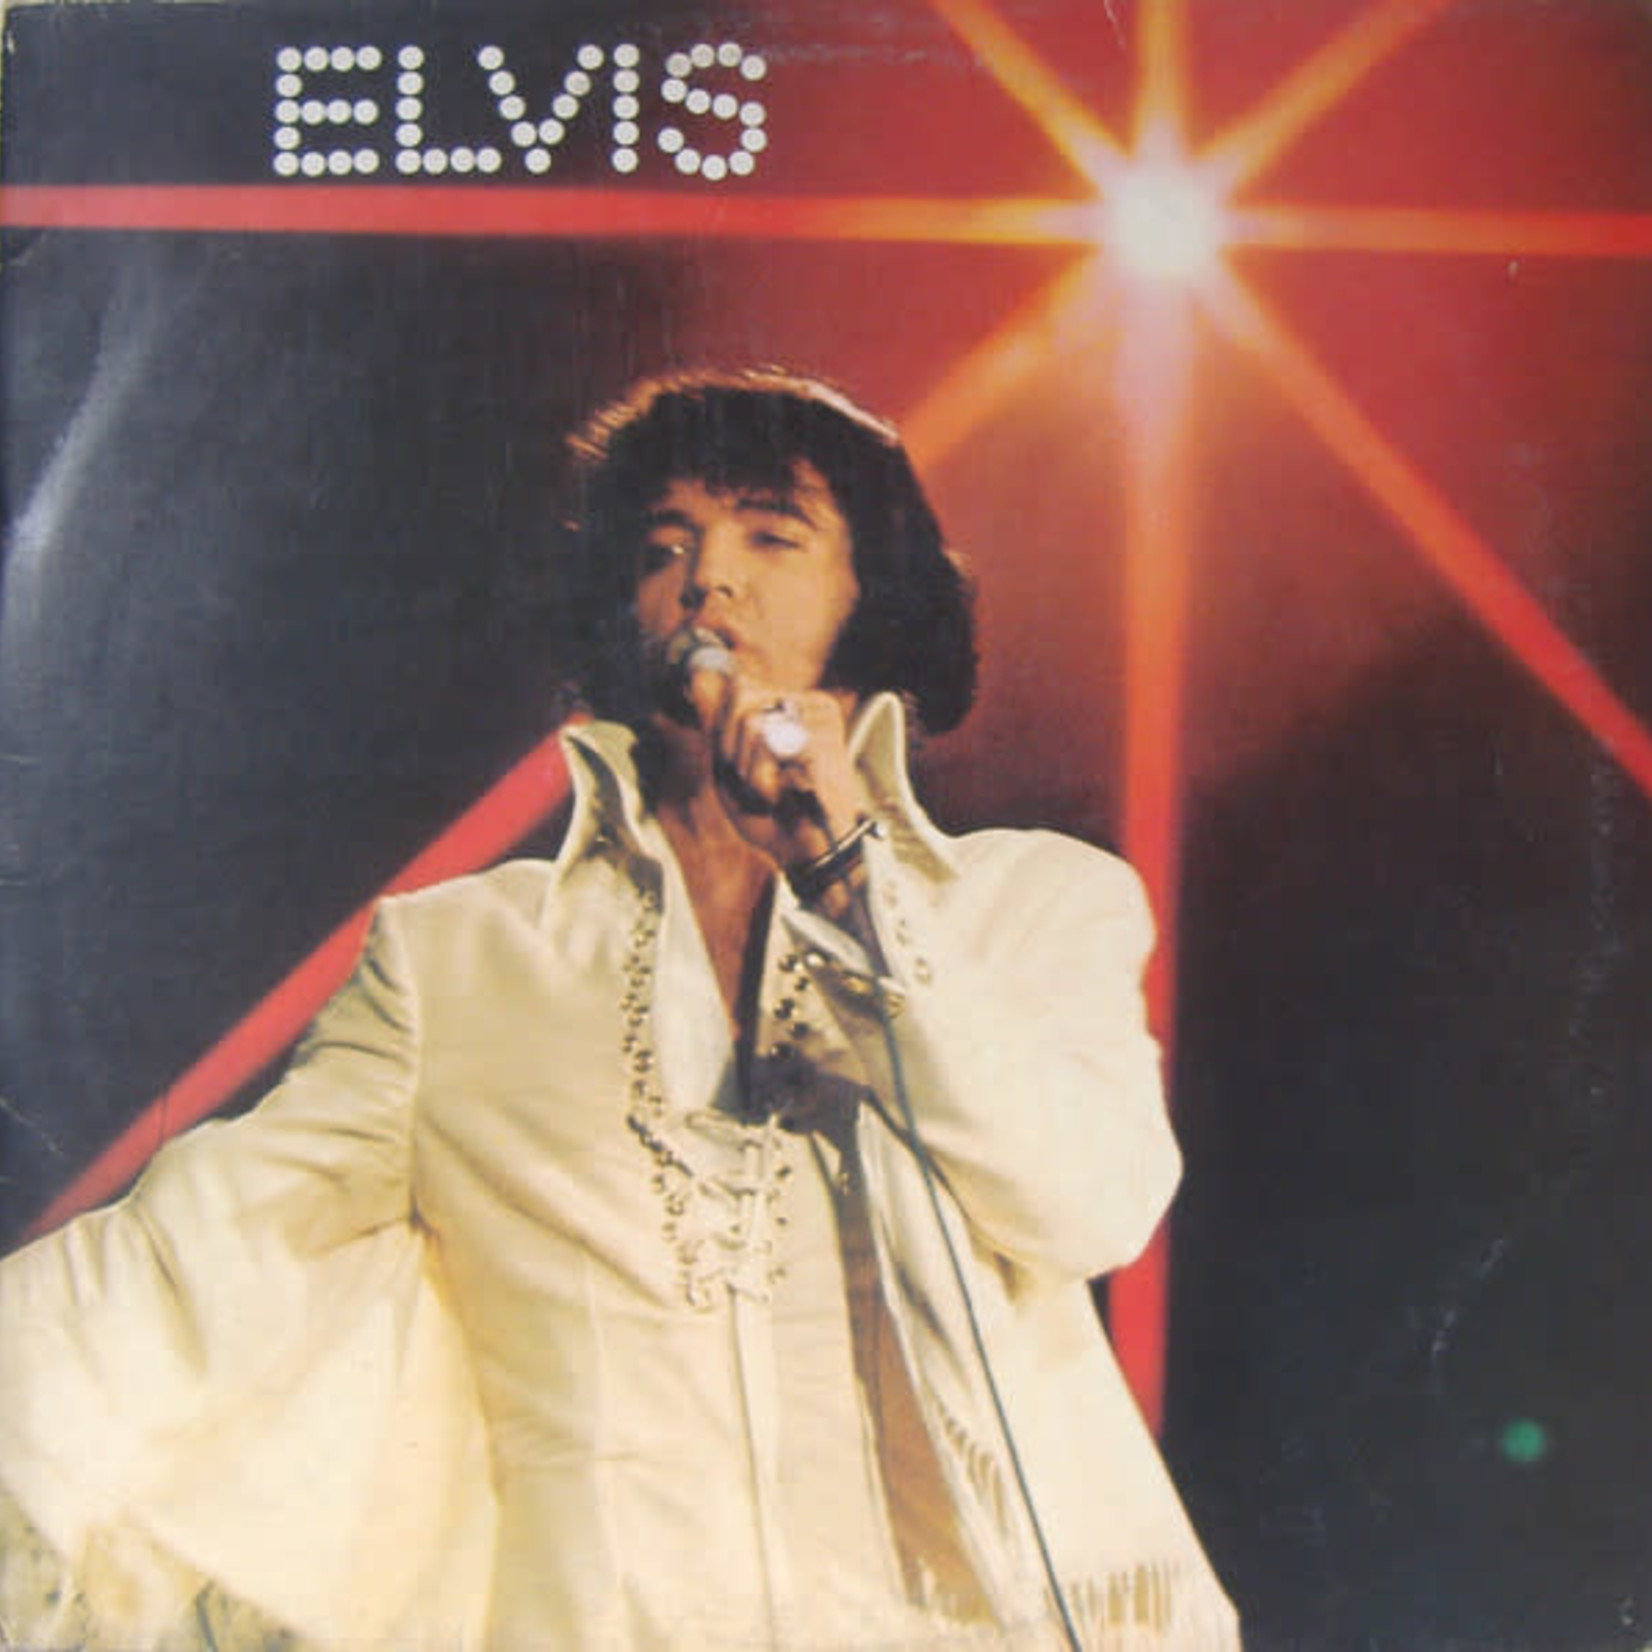 Elvis Presley – You'll Never Walk Alone